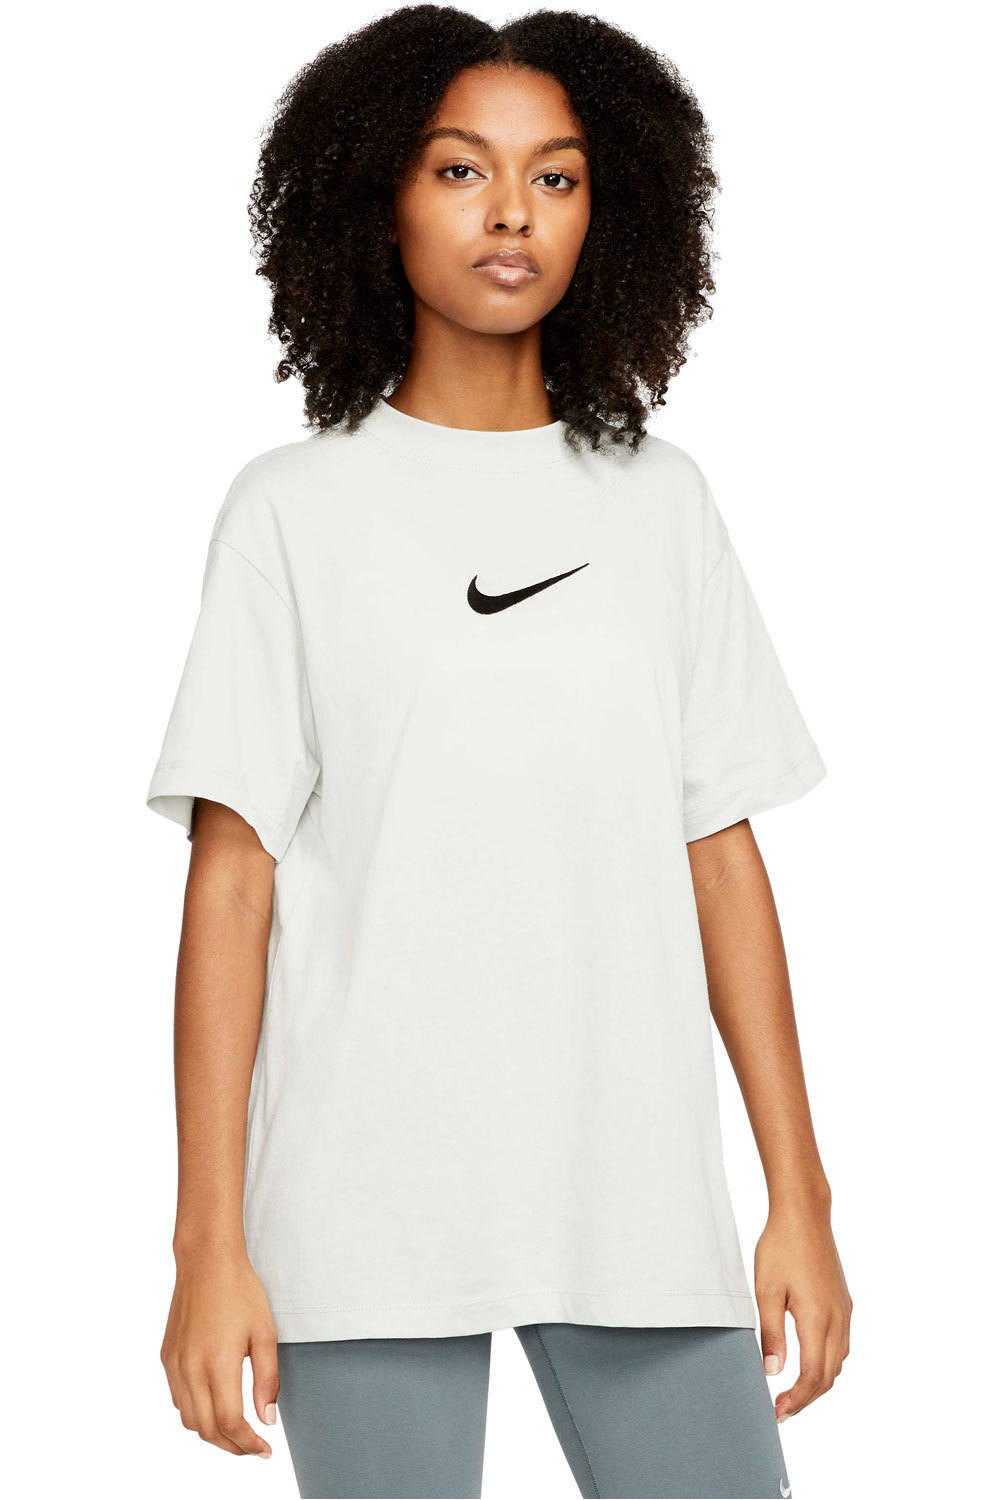 Nike camiseta manga corta mujer W NSW TEE BF MS vista frontal